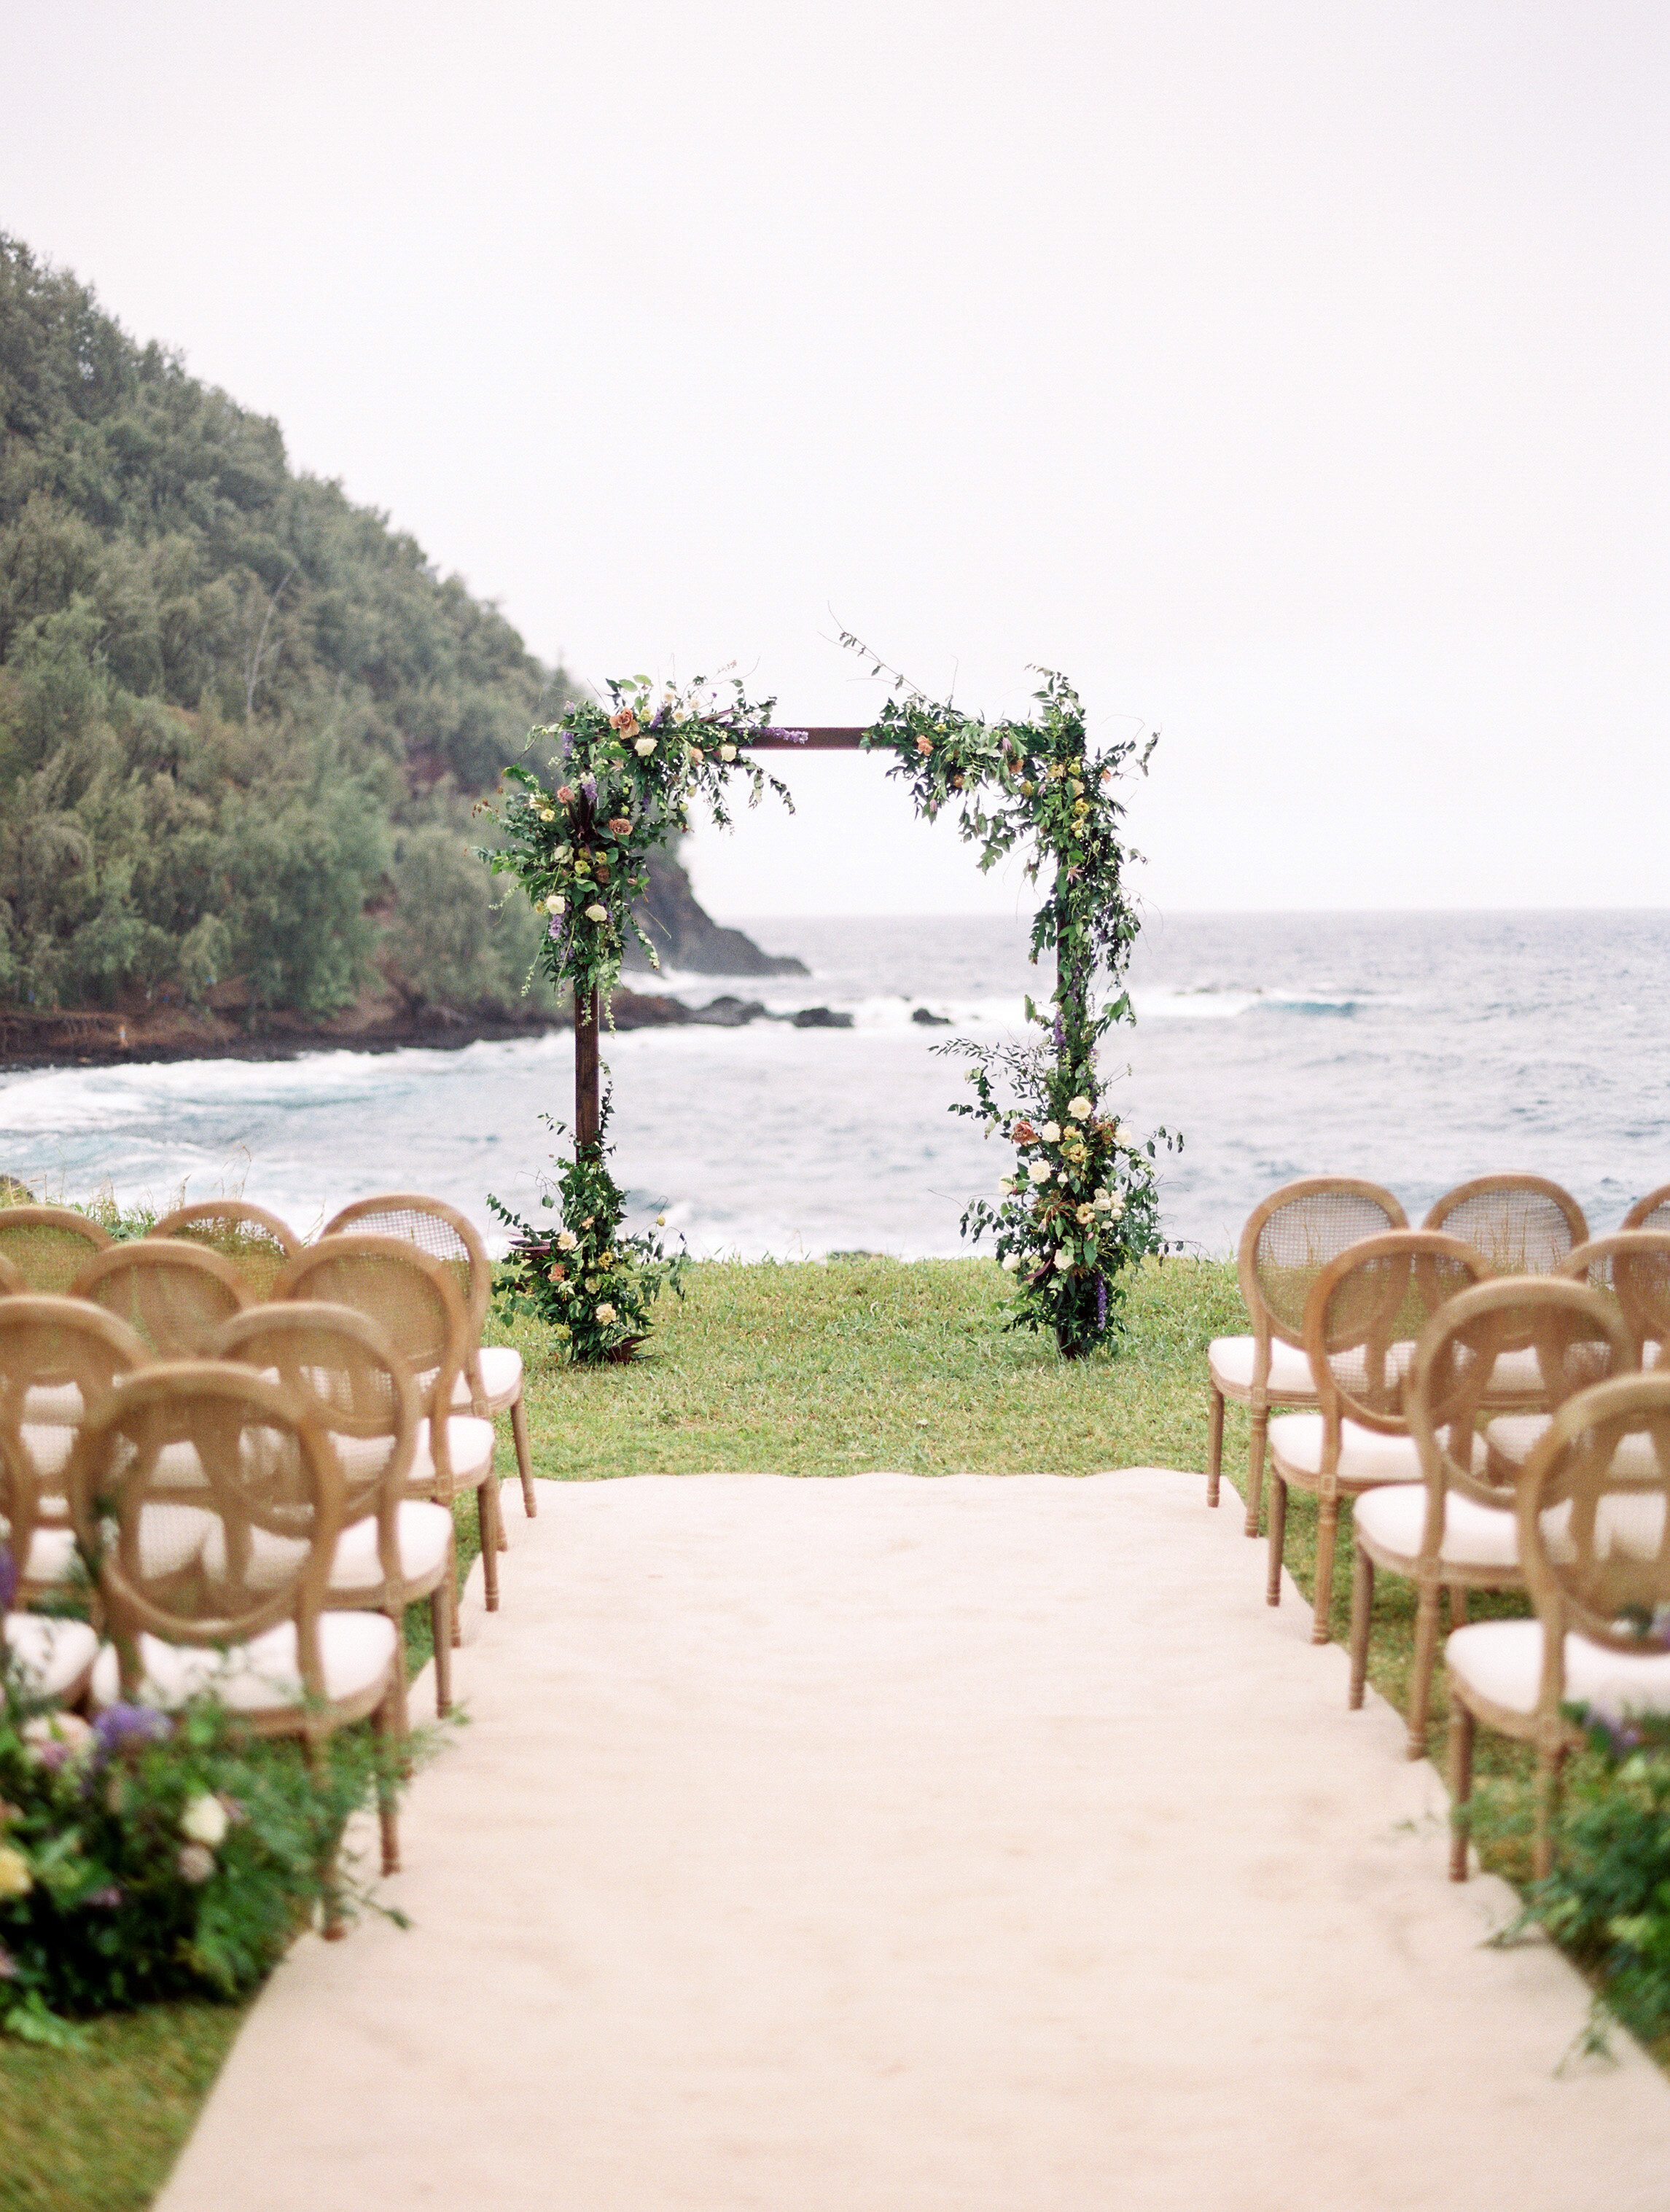 Wedding backdrop